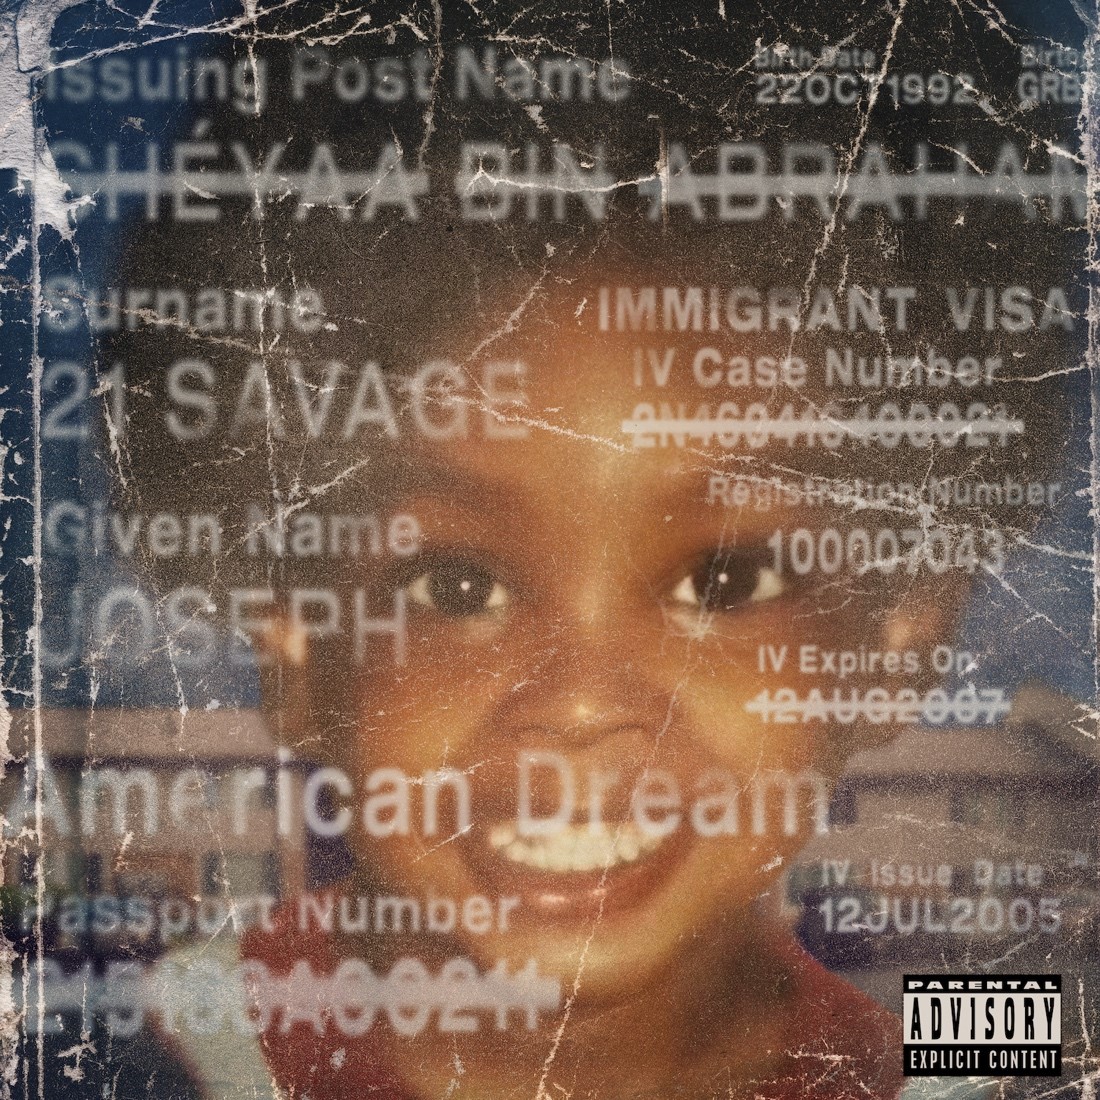 21 Savage ‘American Dream’ album artwork